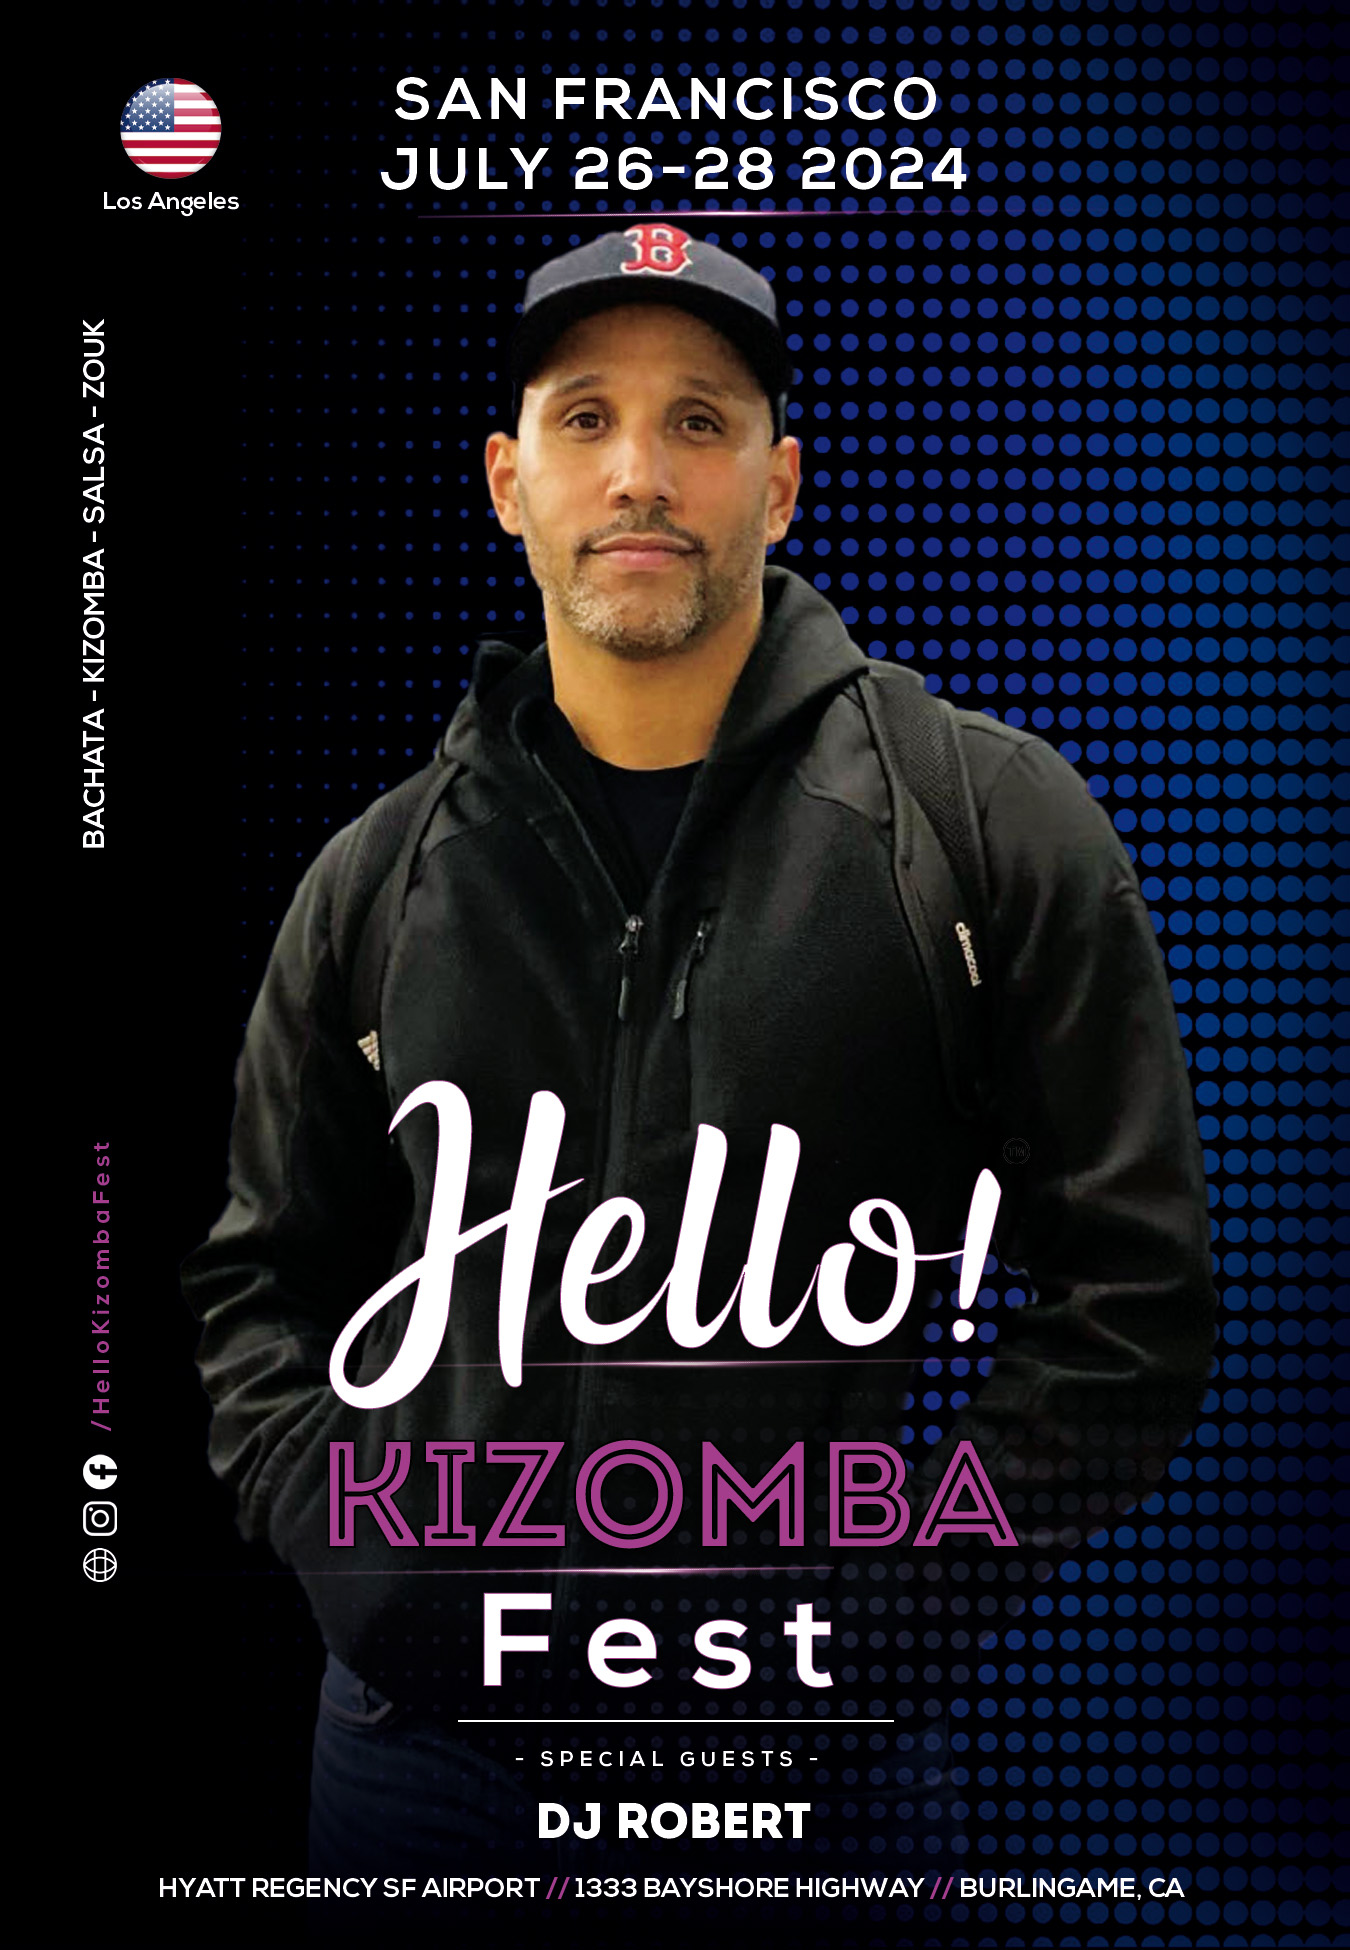 Hello Kizomba Fest - DJ Robert - Los Angeles